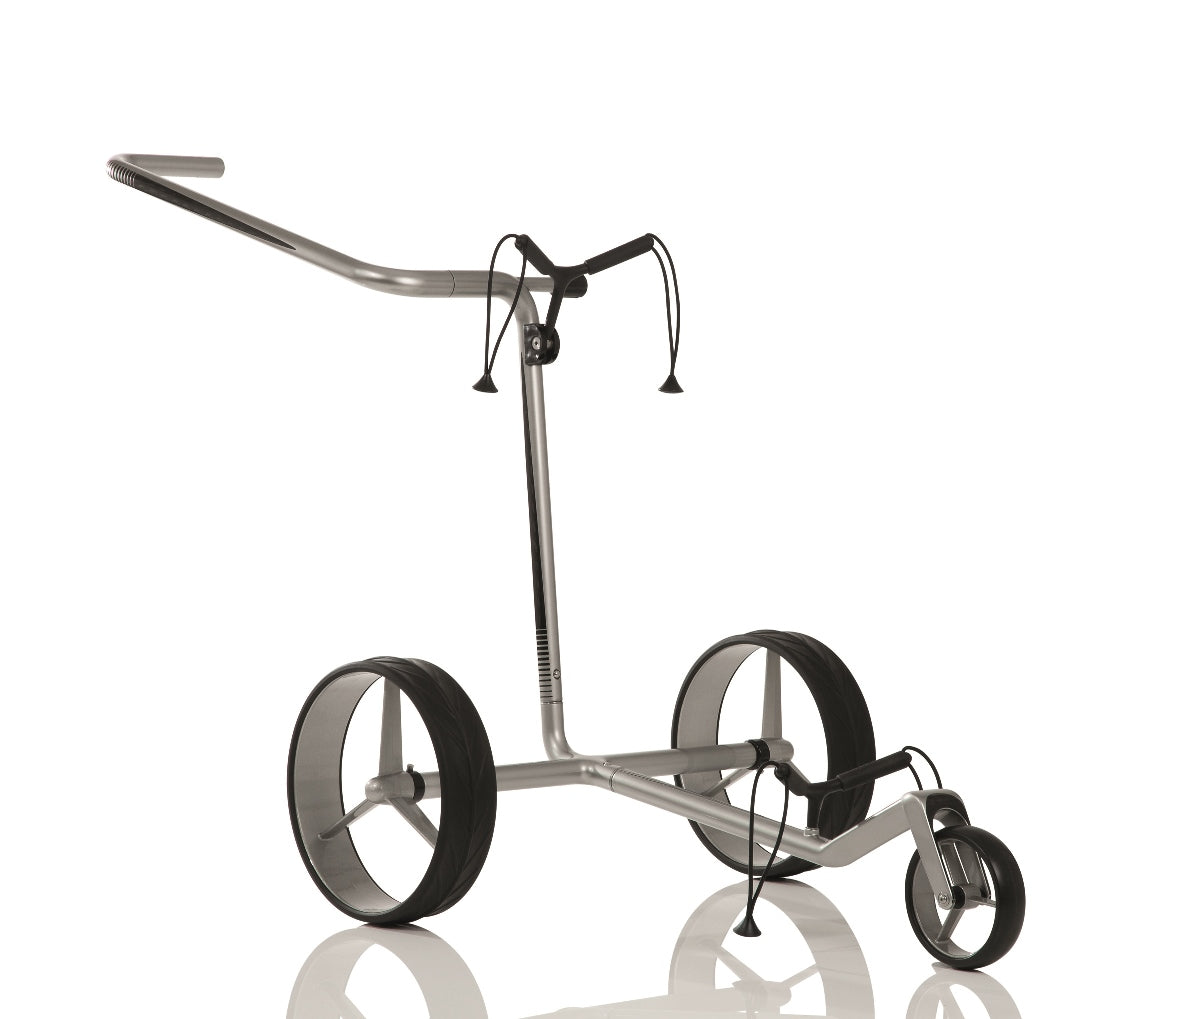 JuCad golf trolley carbon silver-black 3 wheels - the modern lightweight